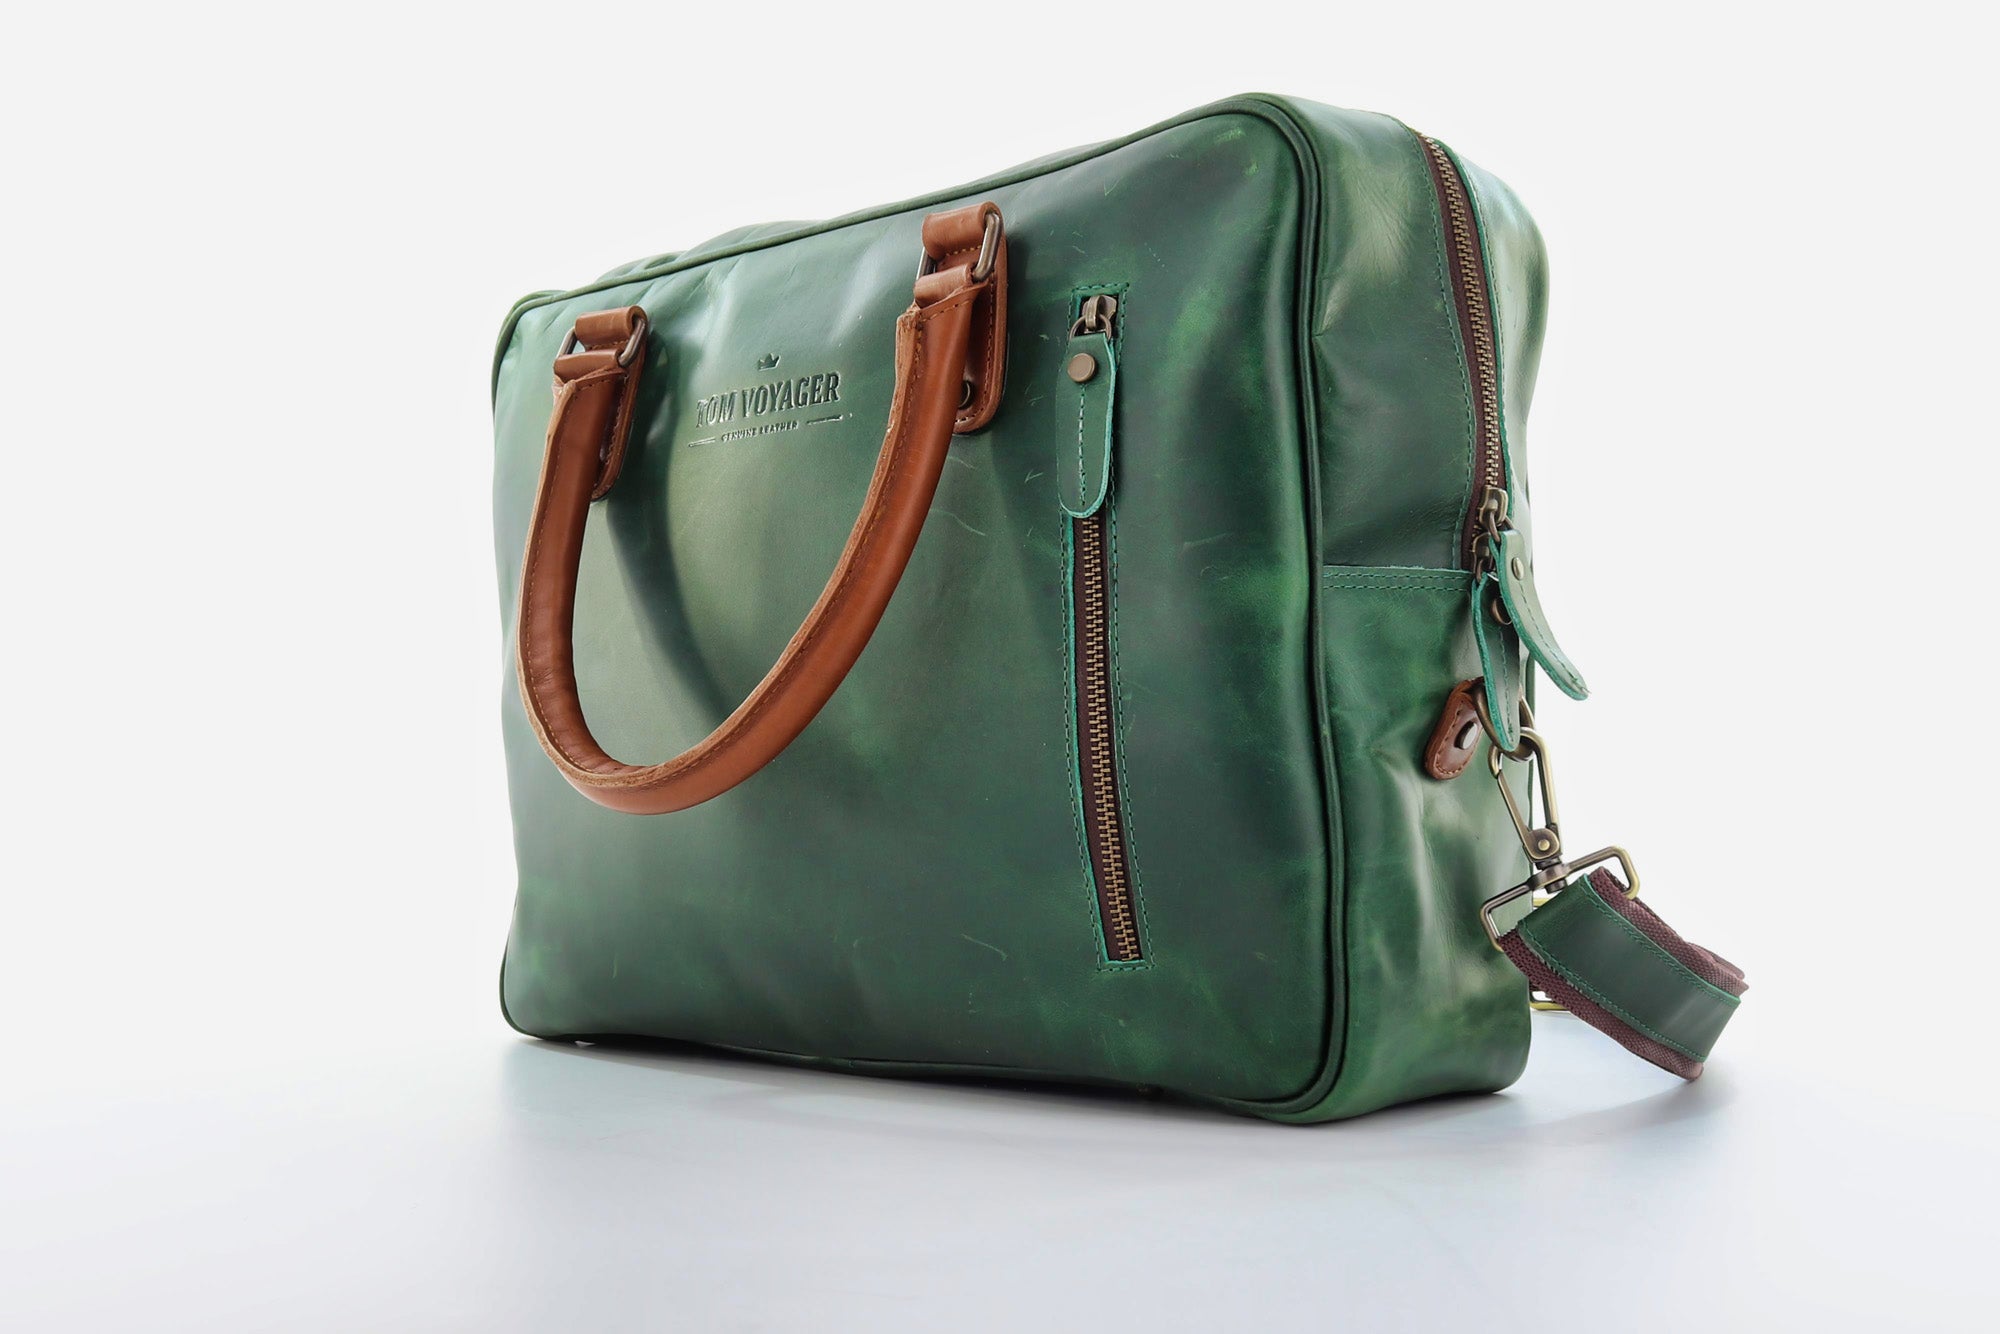 Emerald leather bag - genuine leather bag - messenger bag - emerald green - side view